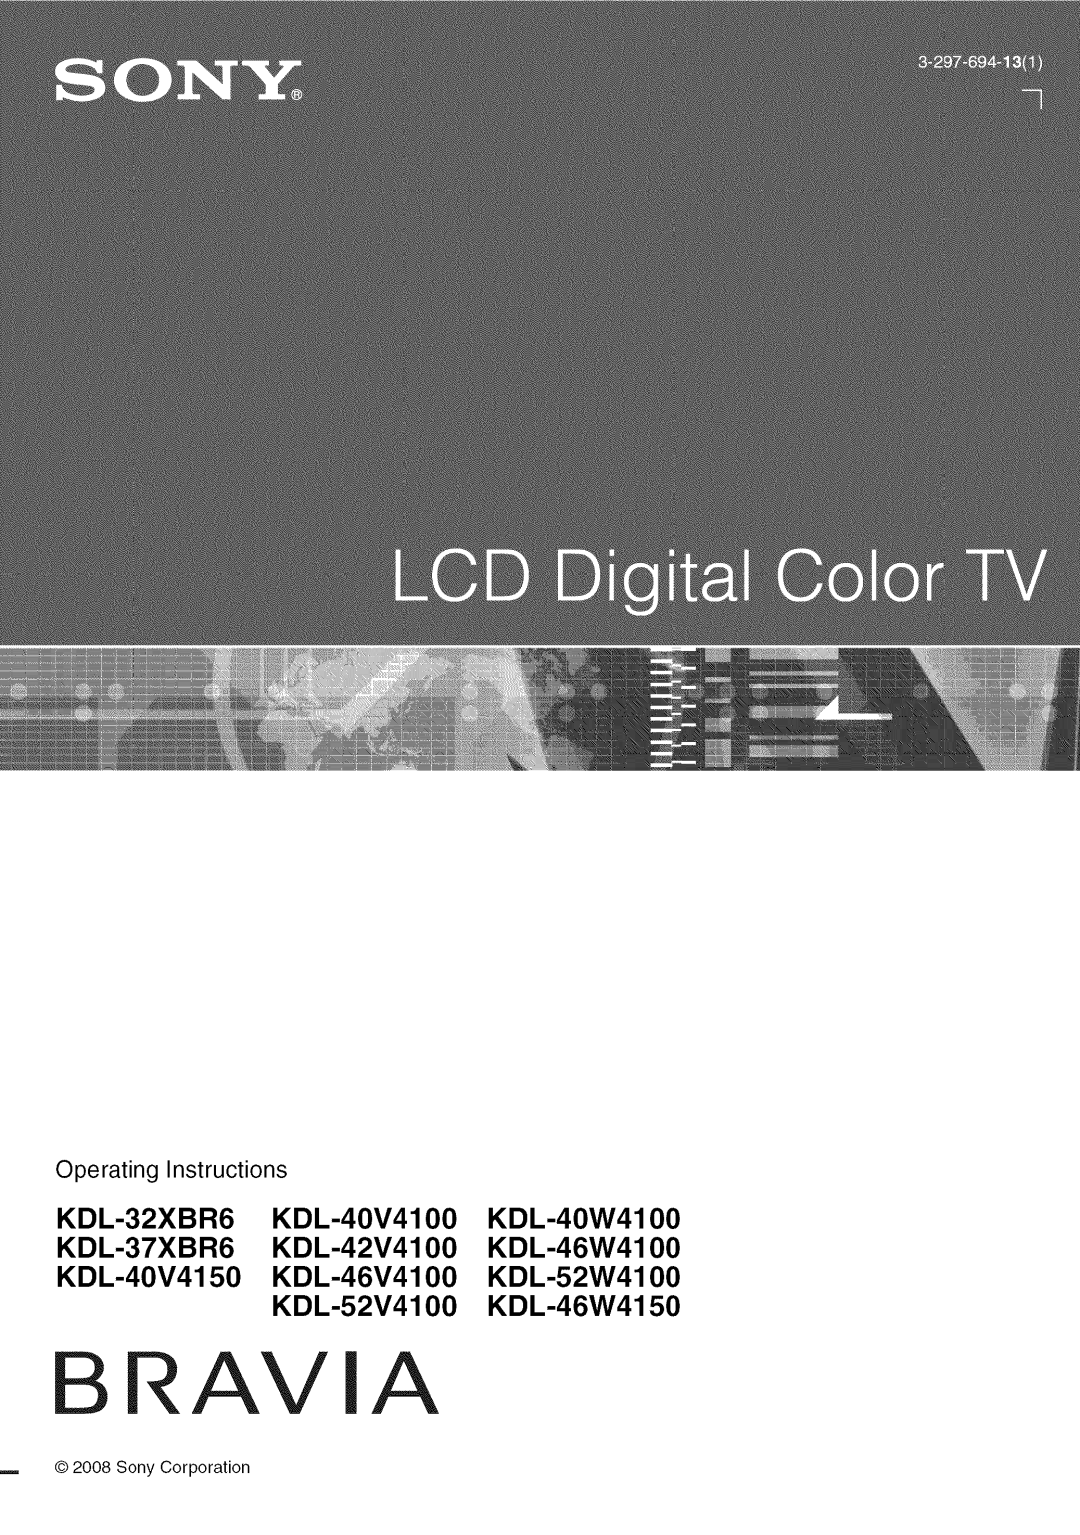 Sony KDL52V4100 operating instructions R Ia, KDL-32XBR6 KDL-40V4100 KDL-40W4100 KDL-37XBR6 KDL-42V4100 KDL-46W4100 